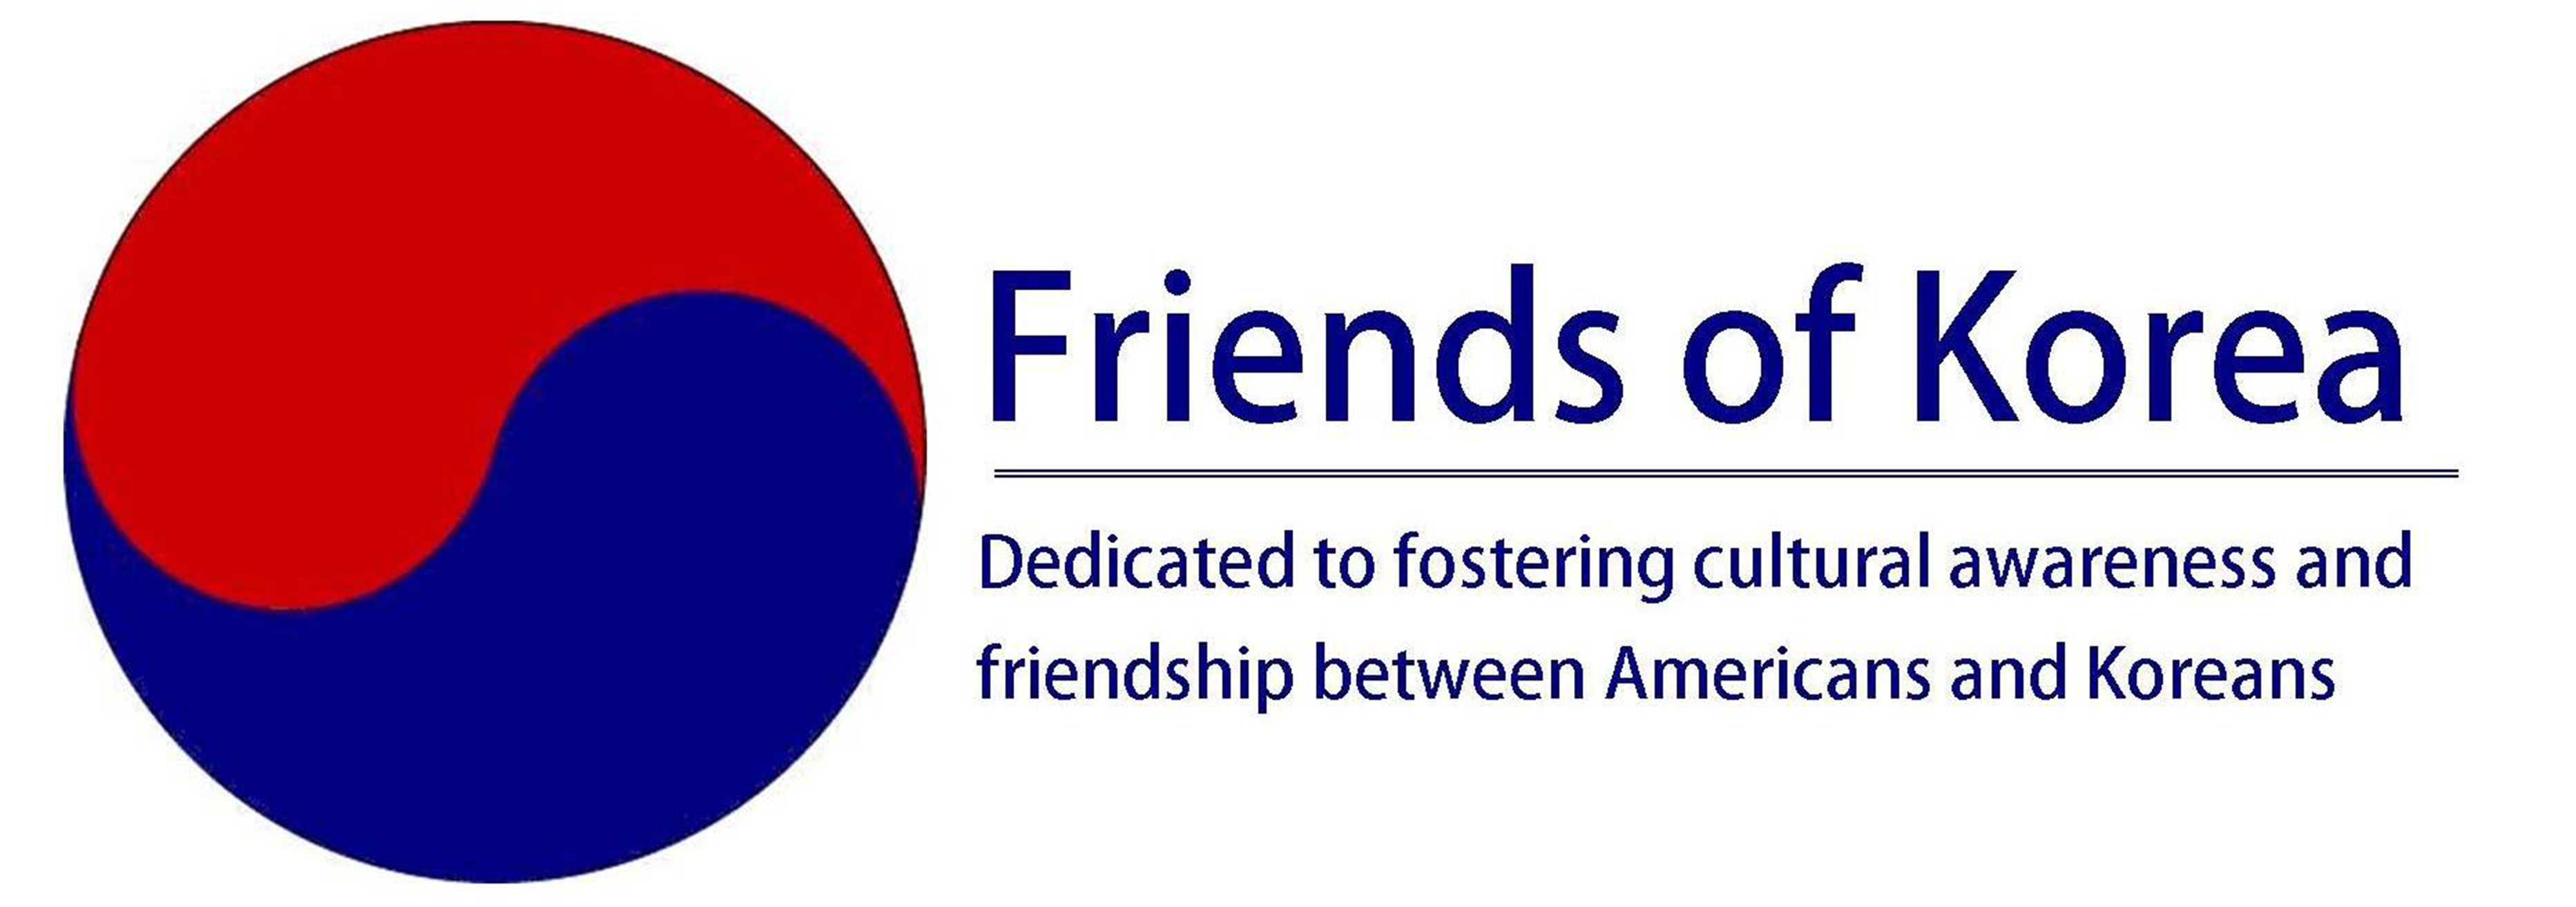 Friends of Korea logo